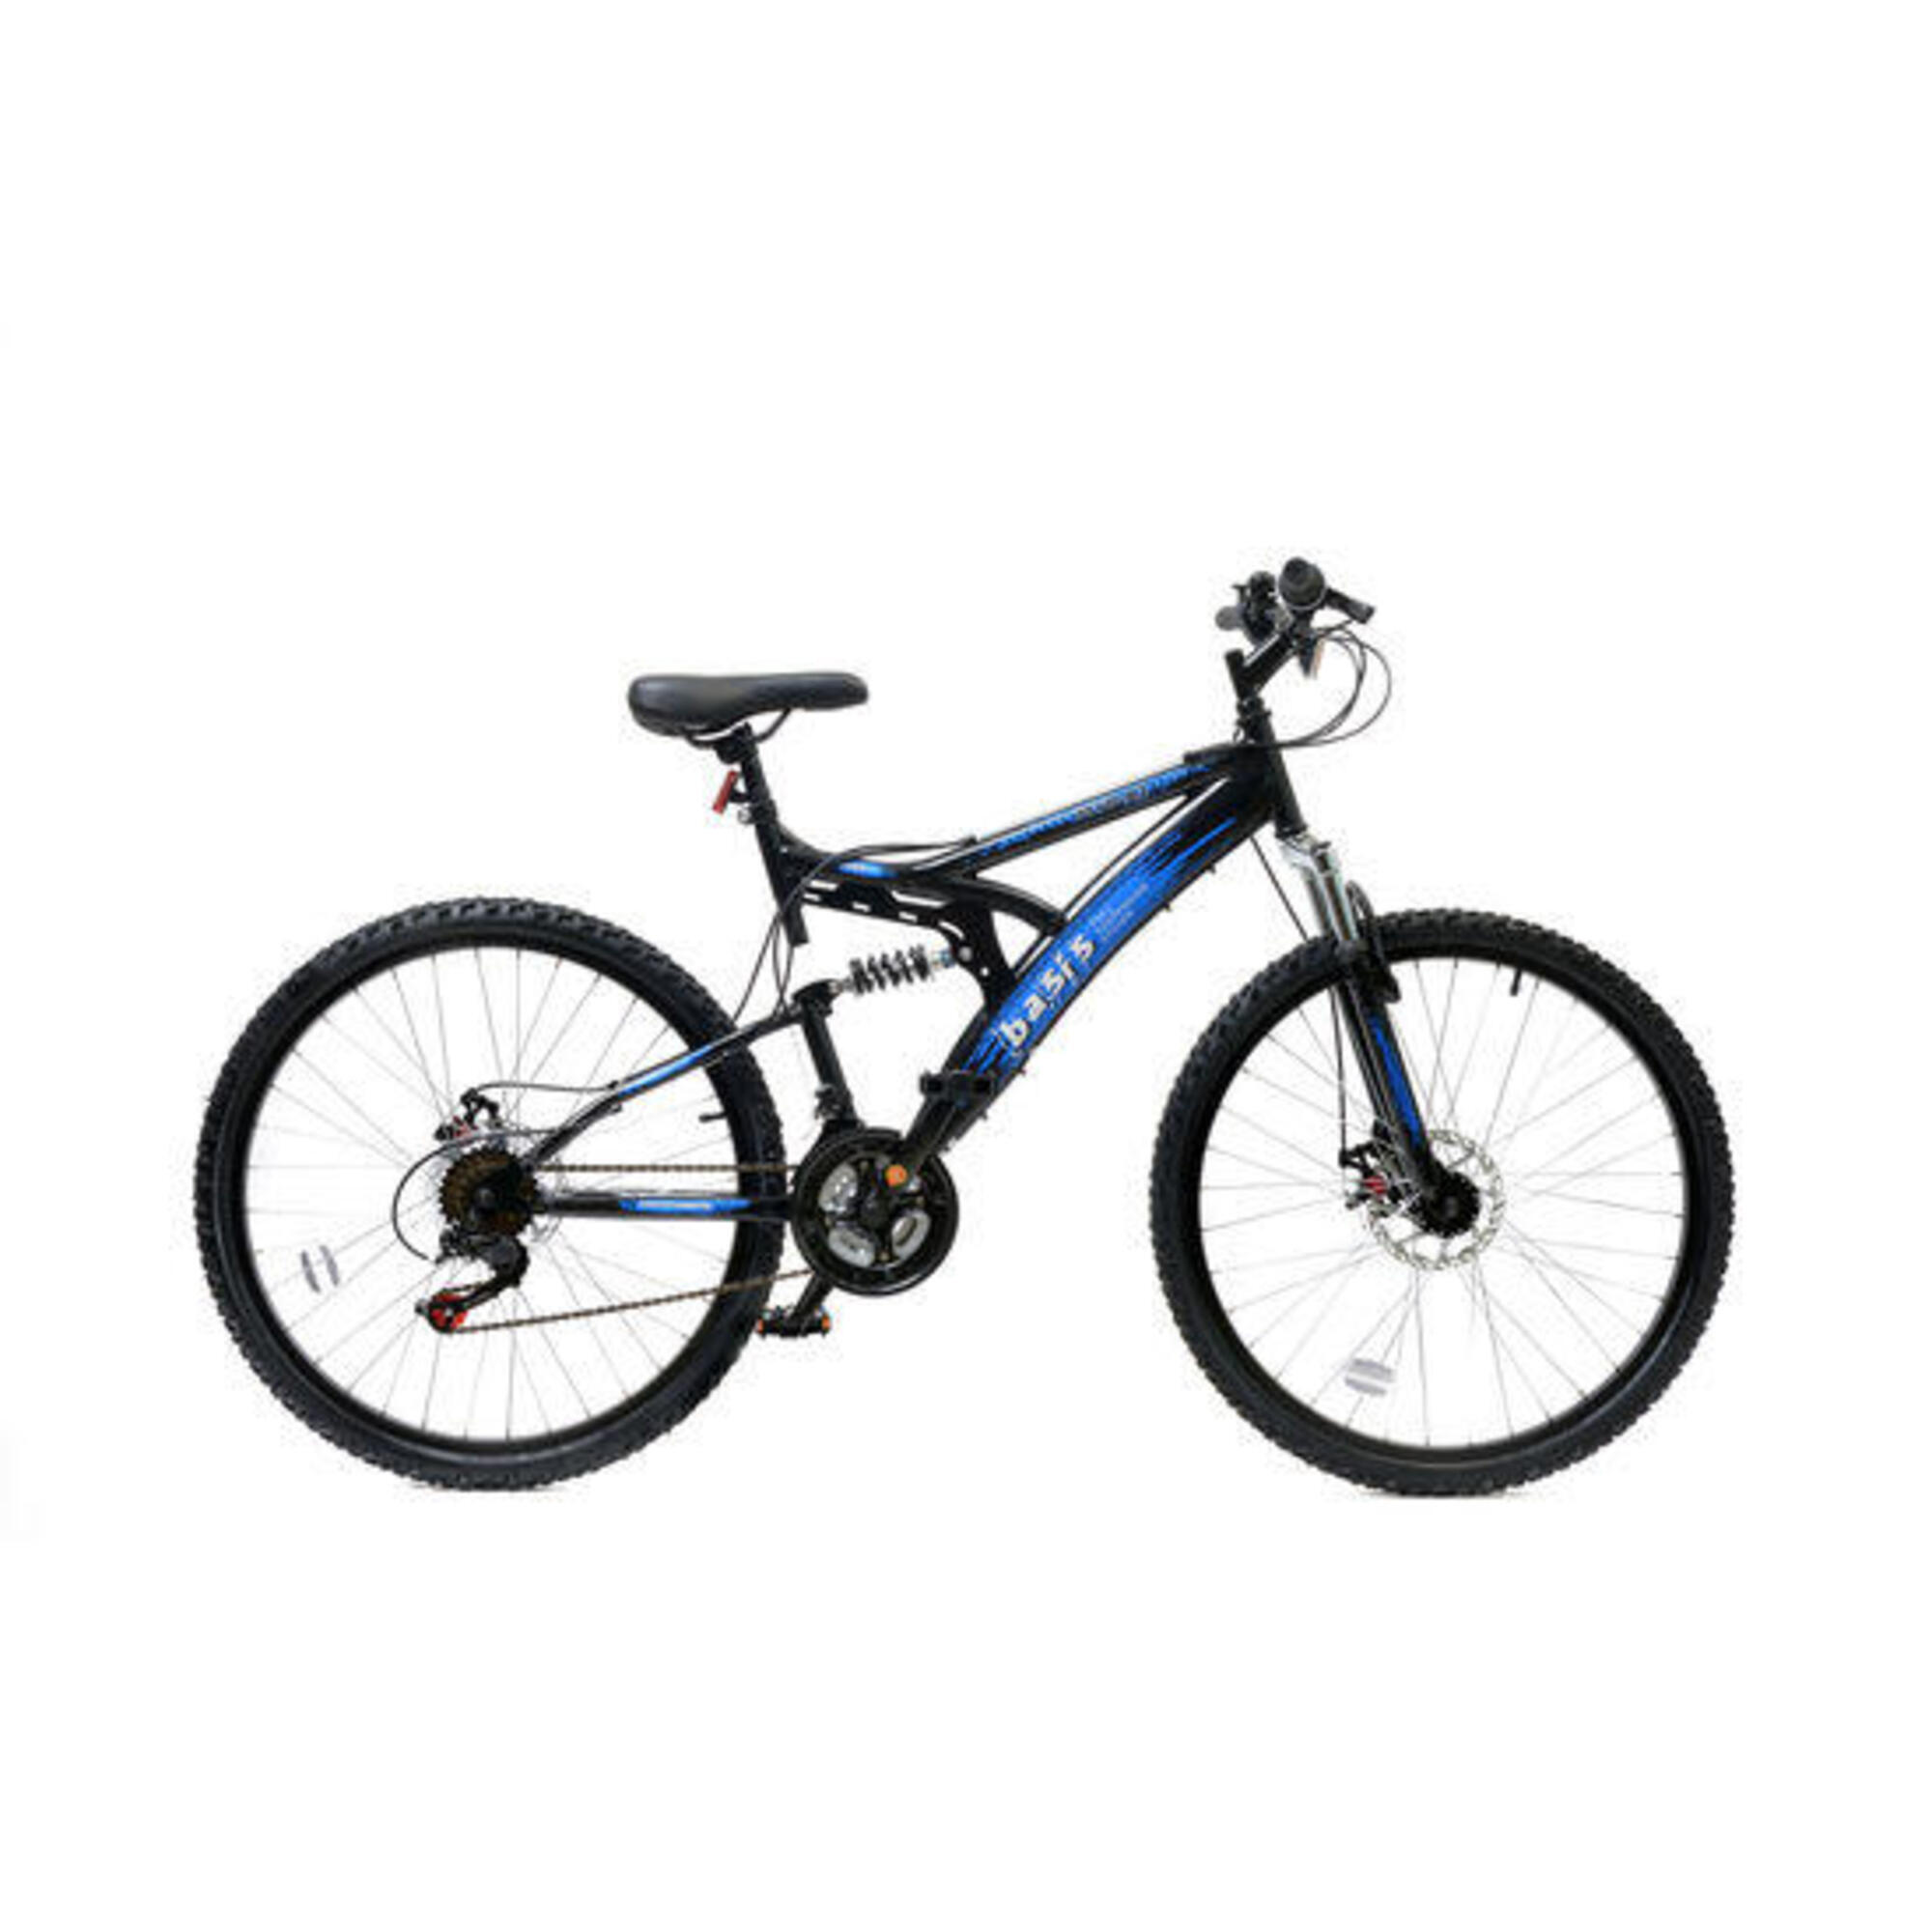 Basis 1 Full Suspension Mountain Bike - 26in Wheel - 18 Speed Black Blue 1/5